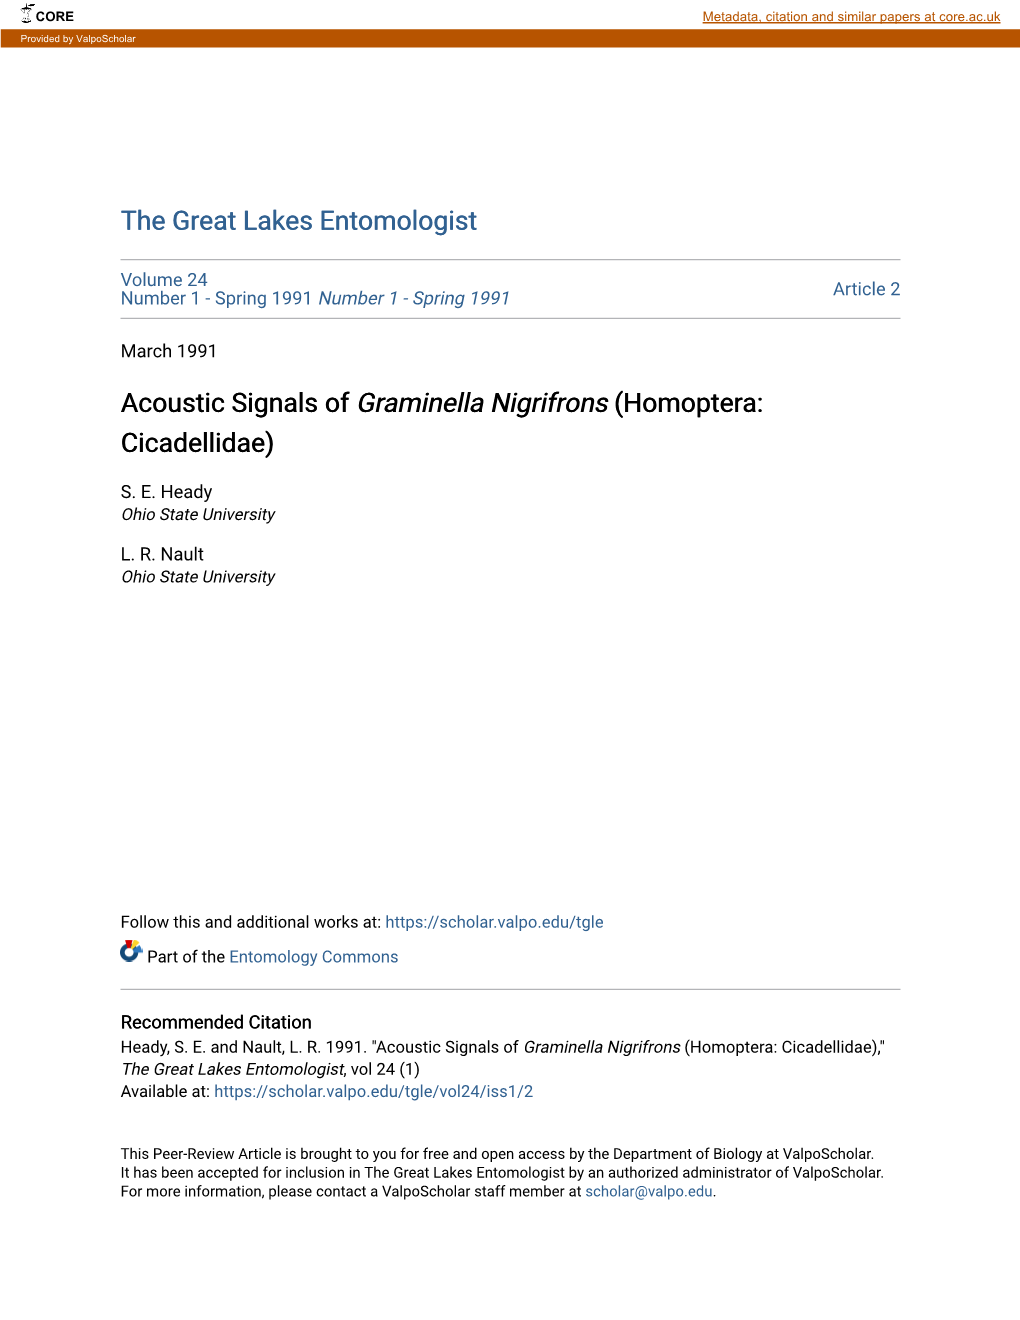 Acoustic Signals of Graminella Nigrifrons (Homoptera: Cicadellidae)